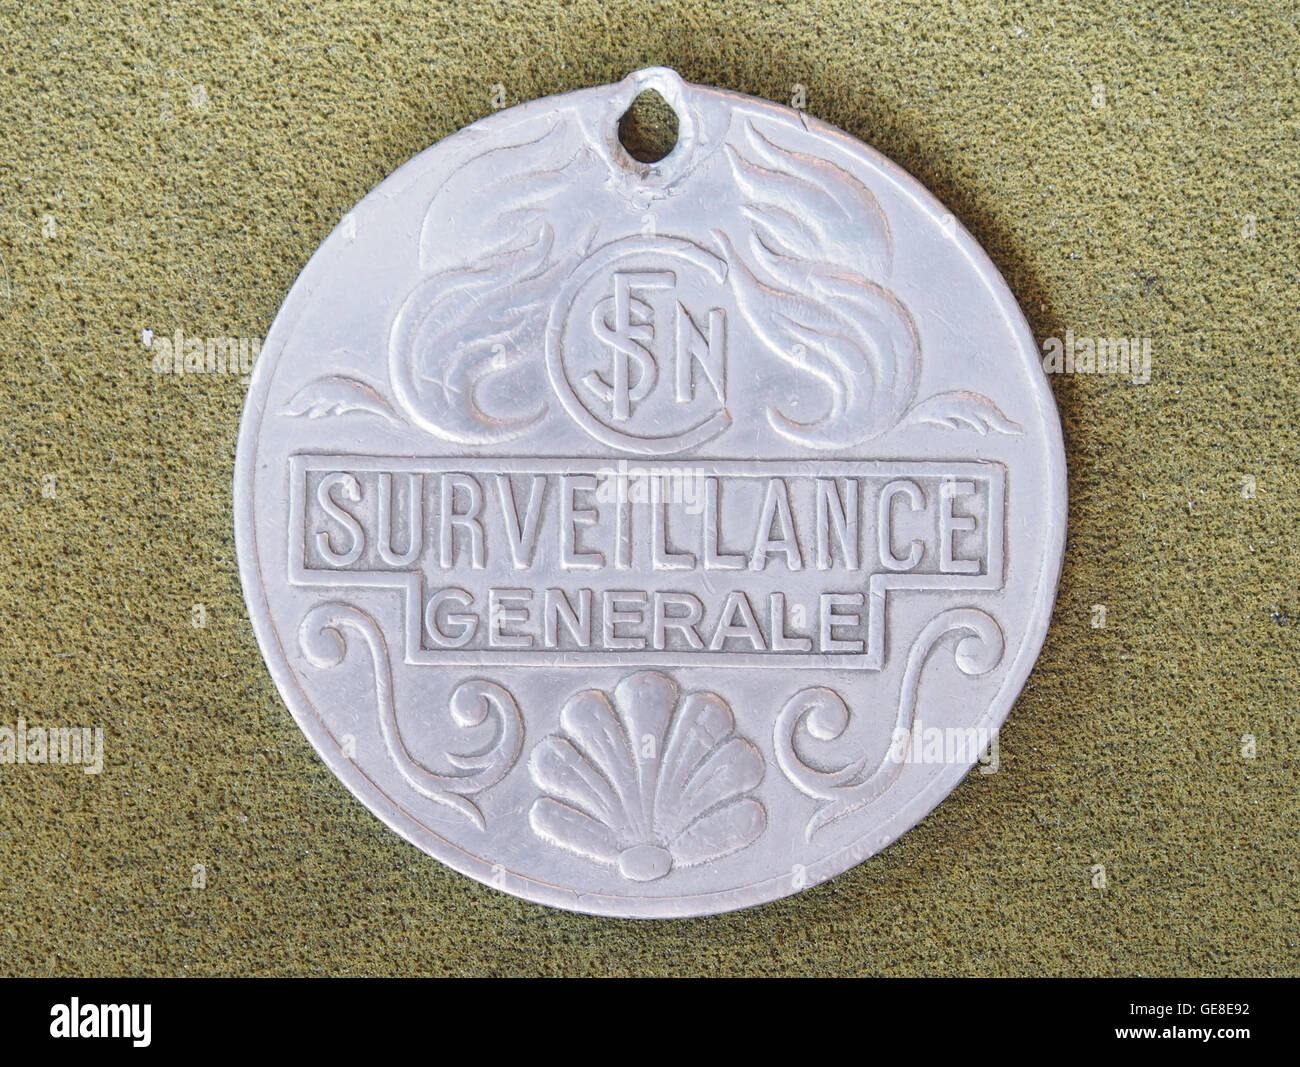 SNCF Surveillance generale coin Stock Photo